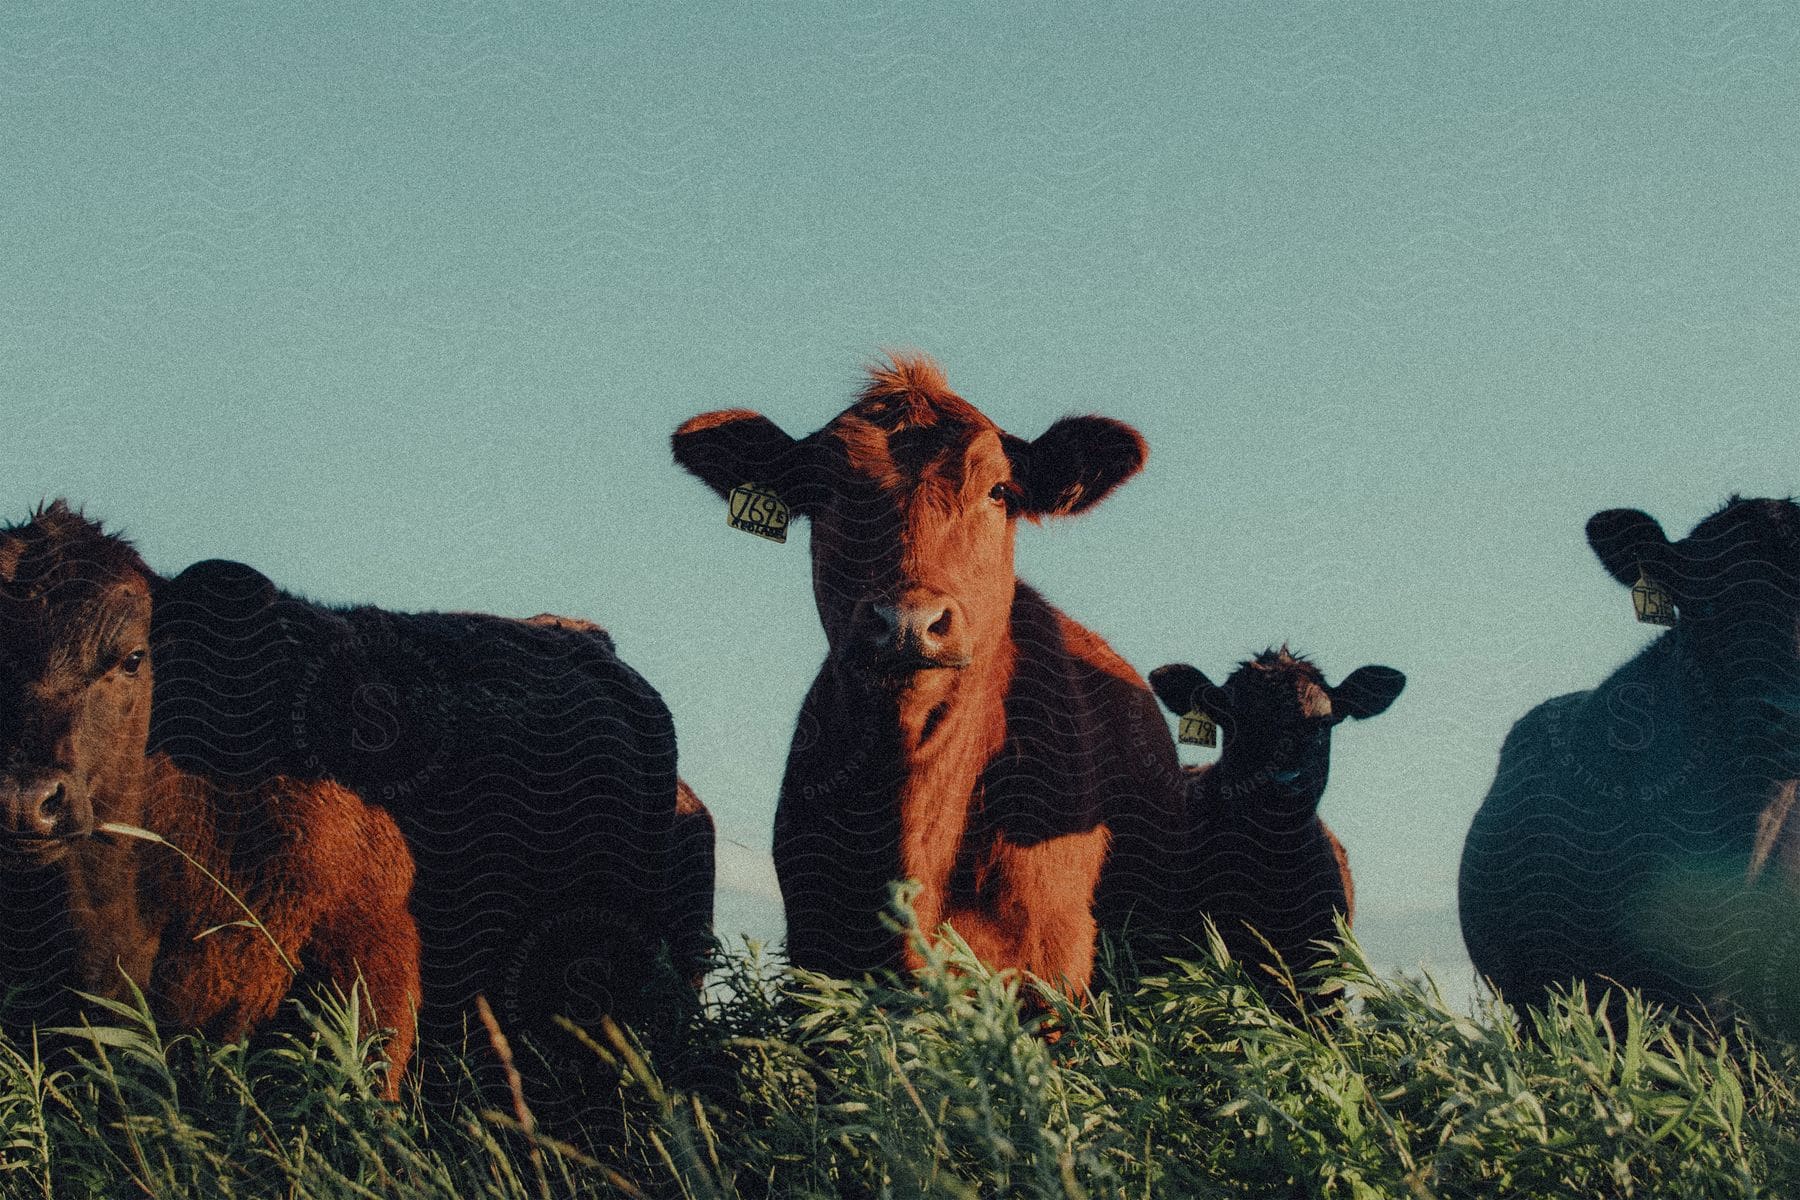 A herd of cows grazes in a field under a clear sky.